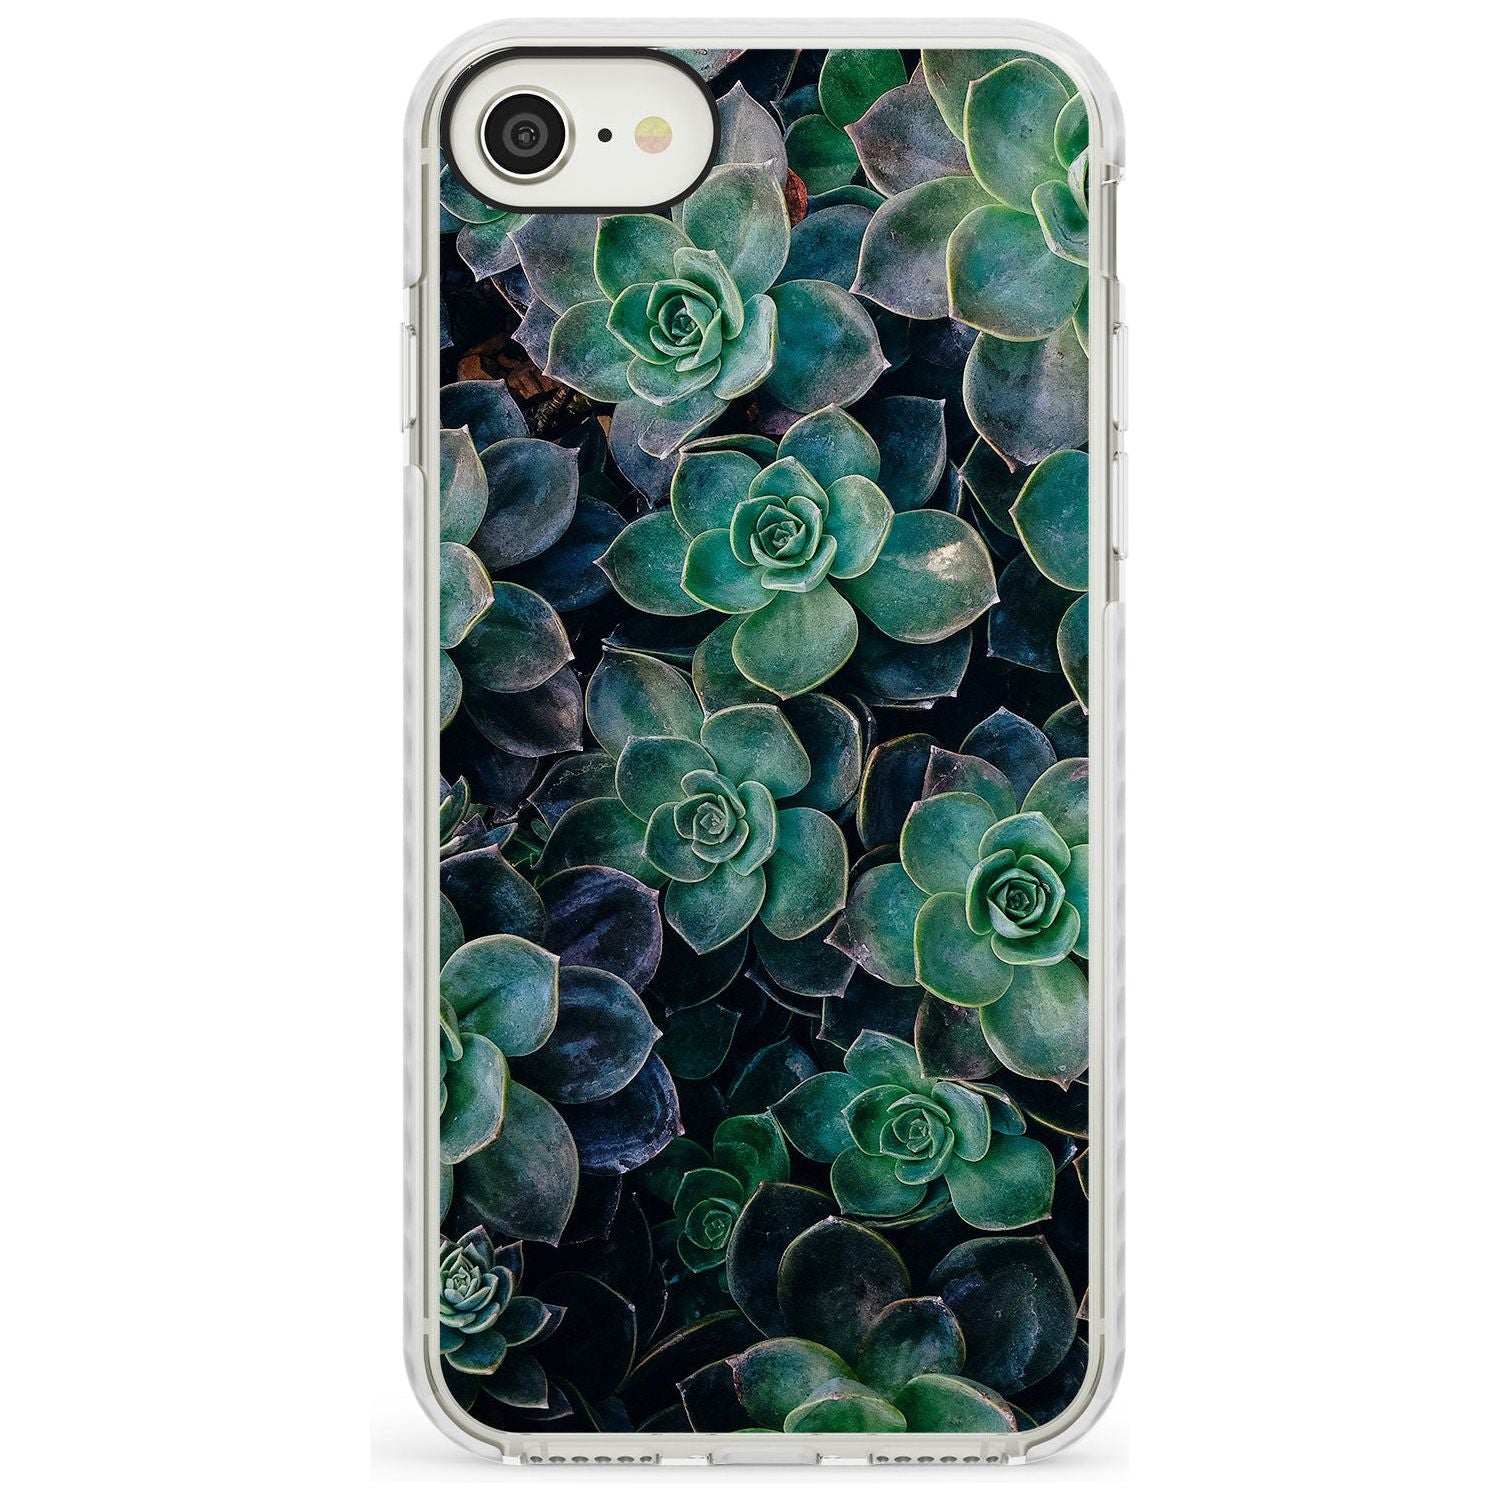 Succulents - Real Botanical Photographs Impact Phone Case for iPhone SE 8 7 Plus